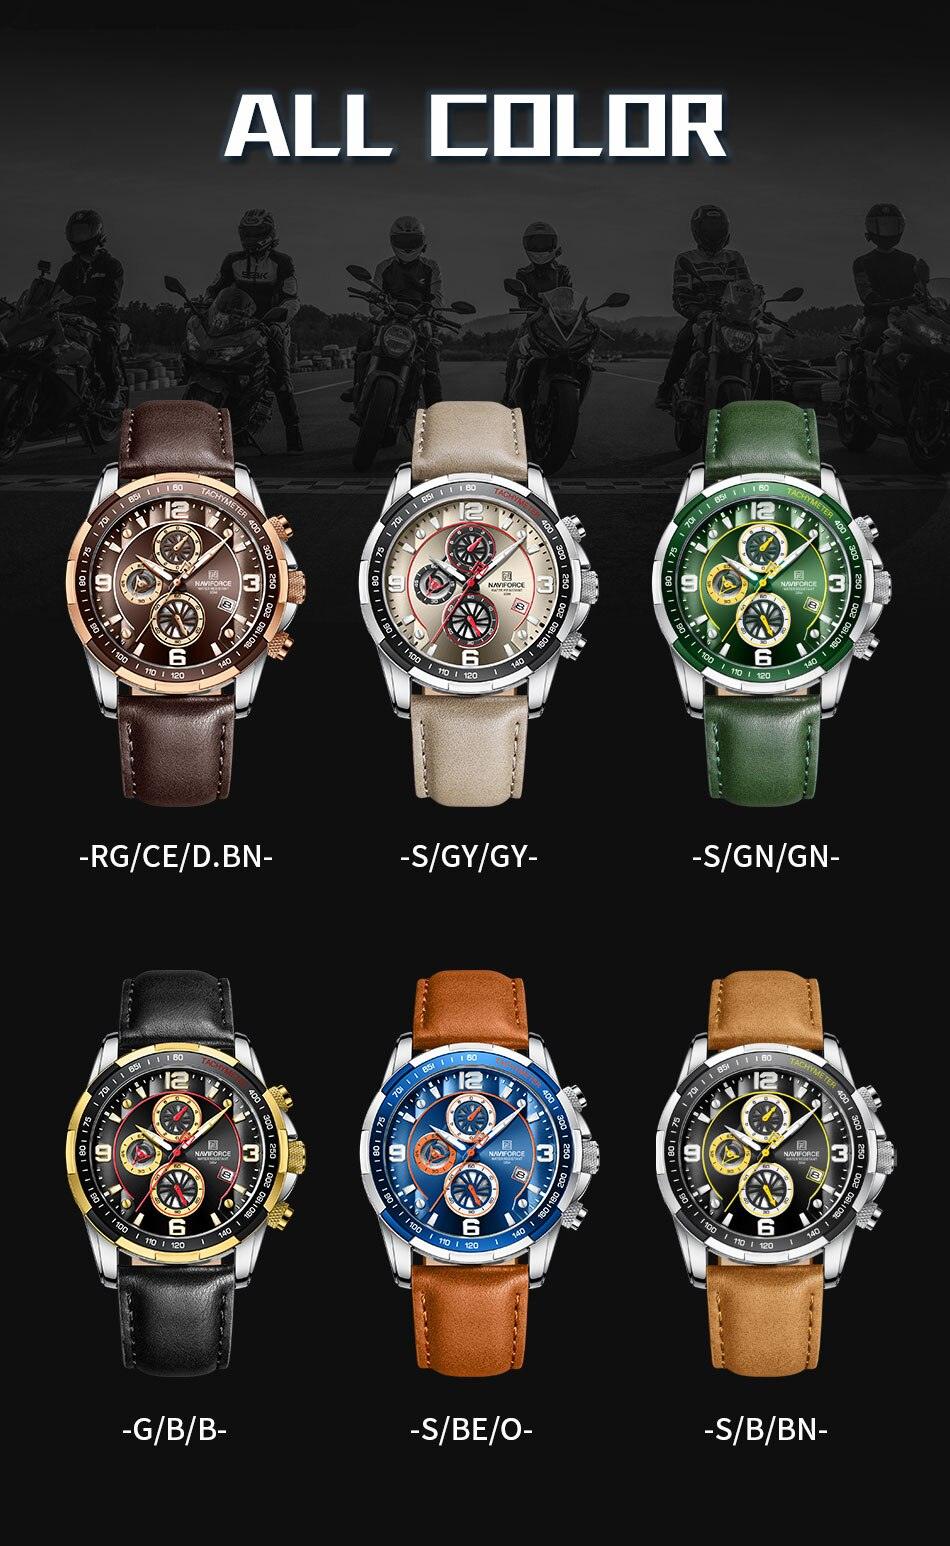 NEW ARRIVAL Top Brand Men Watch Waterproof Sport Luxury Chronograph Quartz Luminous Hands Men’s Watches - The Jewellery Supermarket